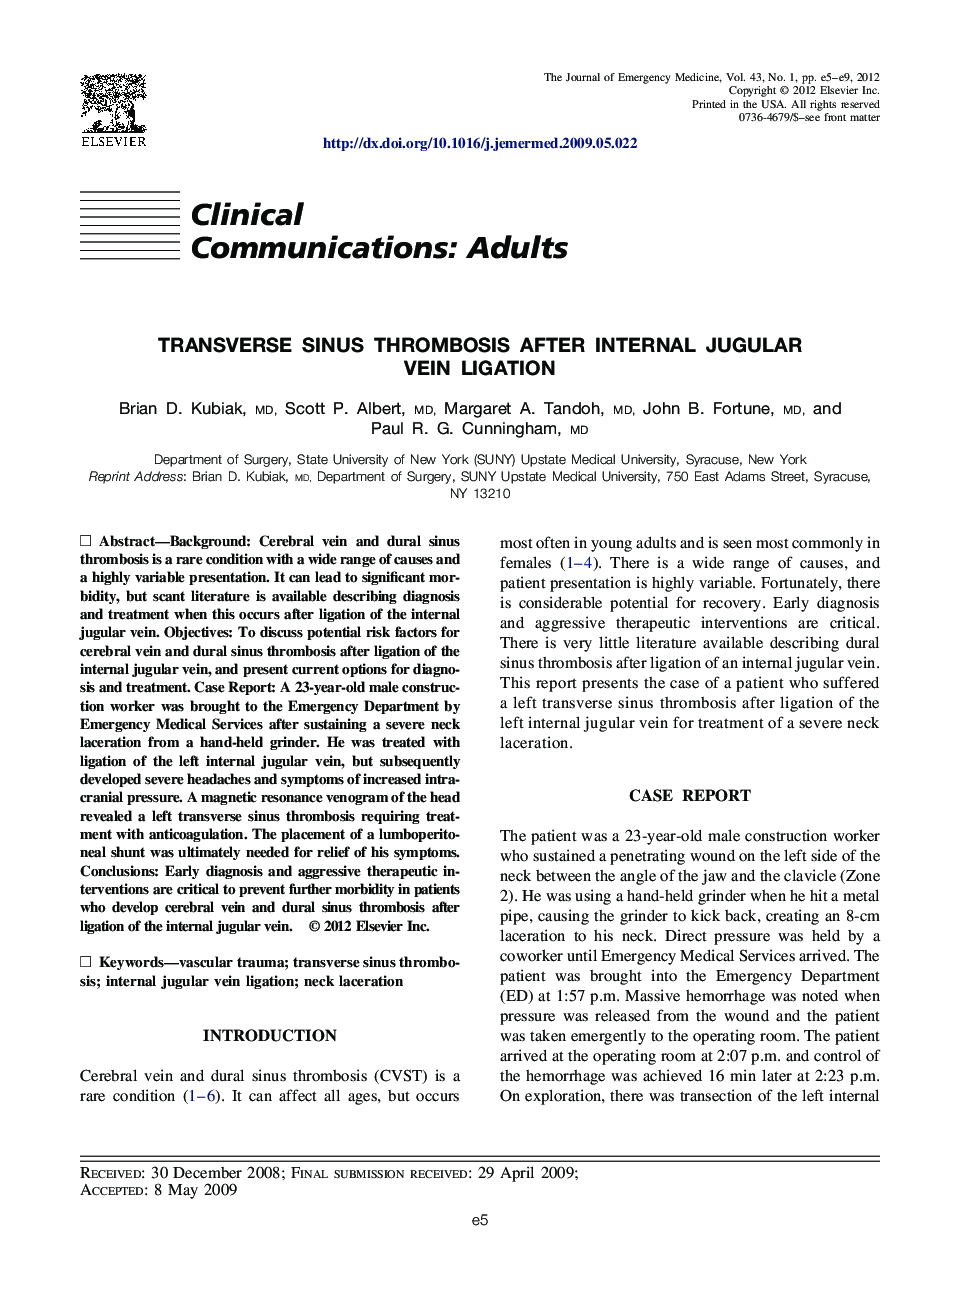 Transverse Sinus Thrombosis After Internal Jugular Vein Ligation